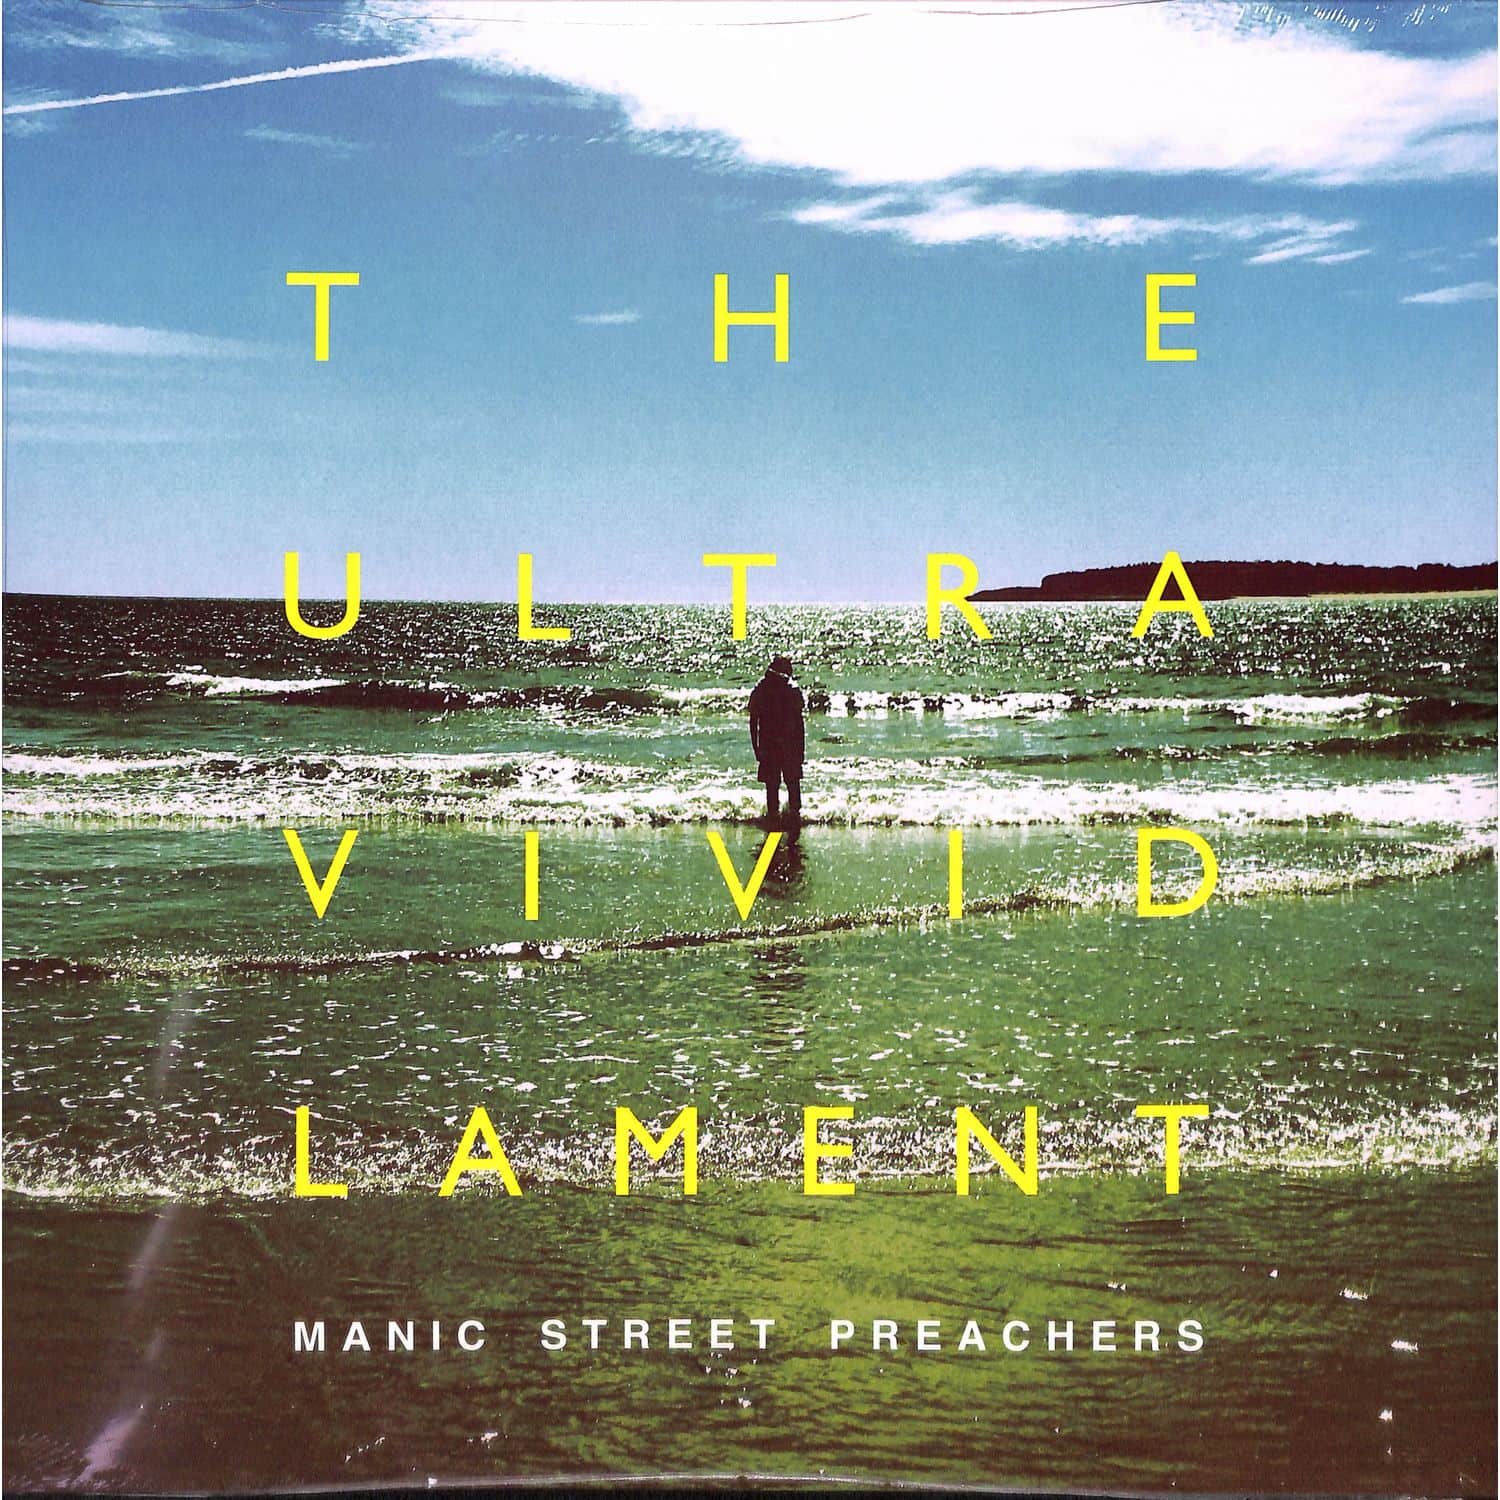 Manic Street Preachers - THE ULTRA VIVID LAMENT 